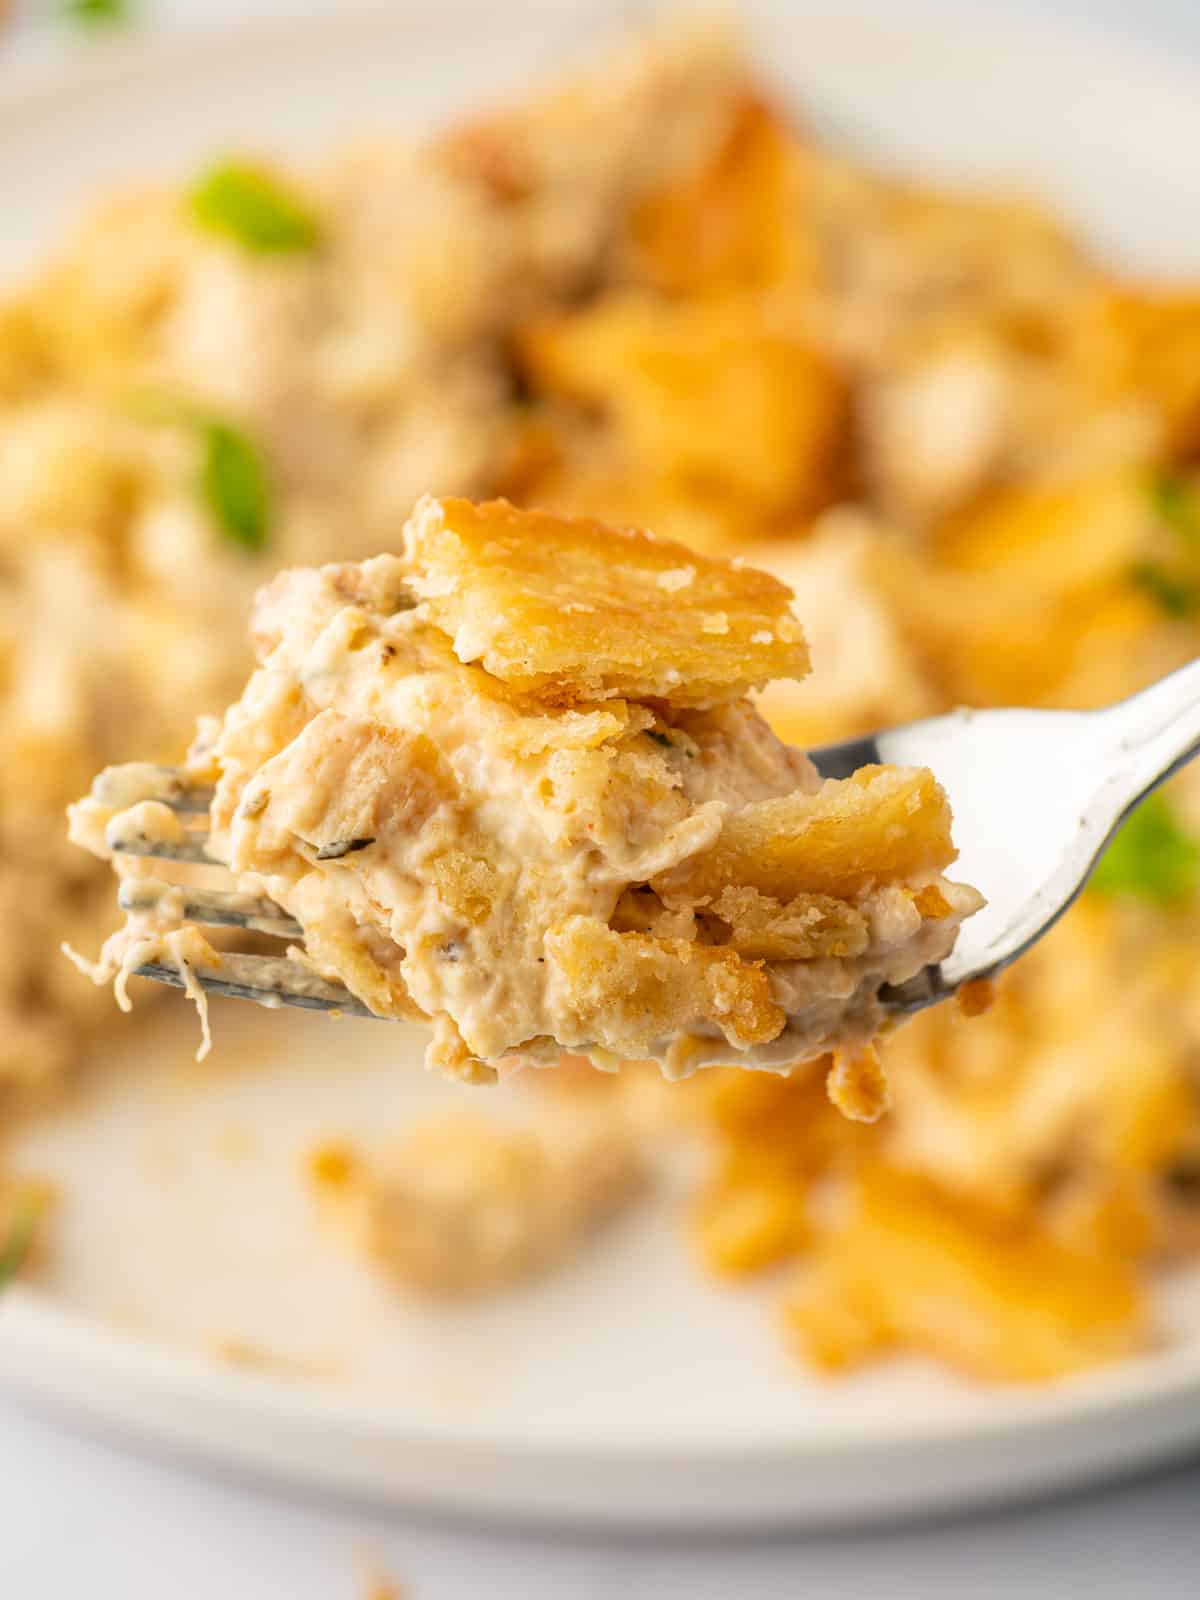 A fork serves of a bite of the best chicken casserole ever.